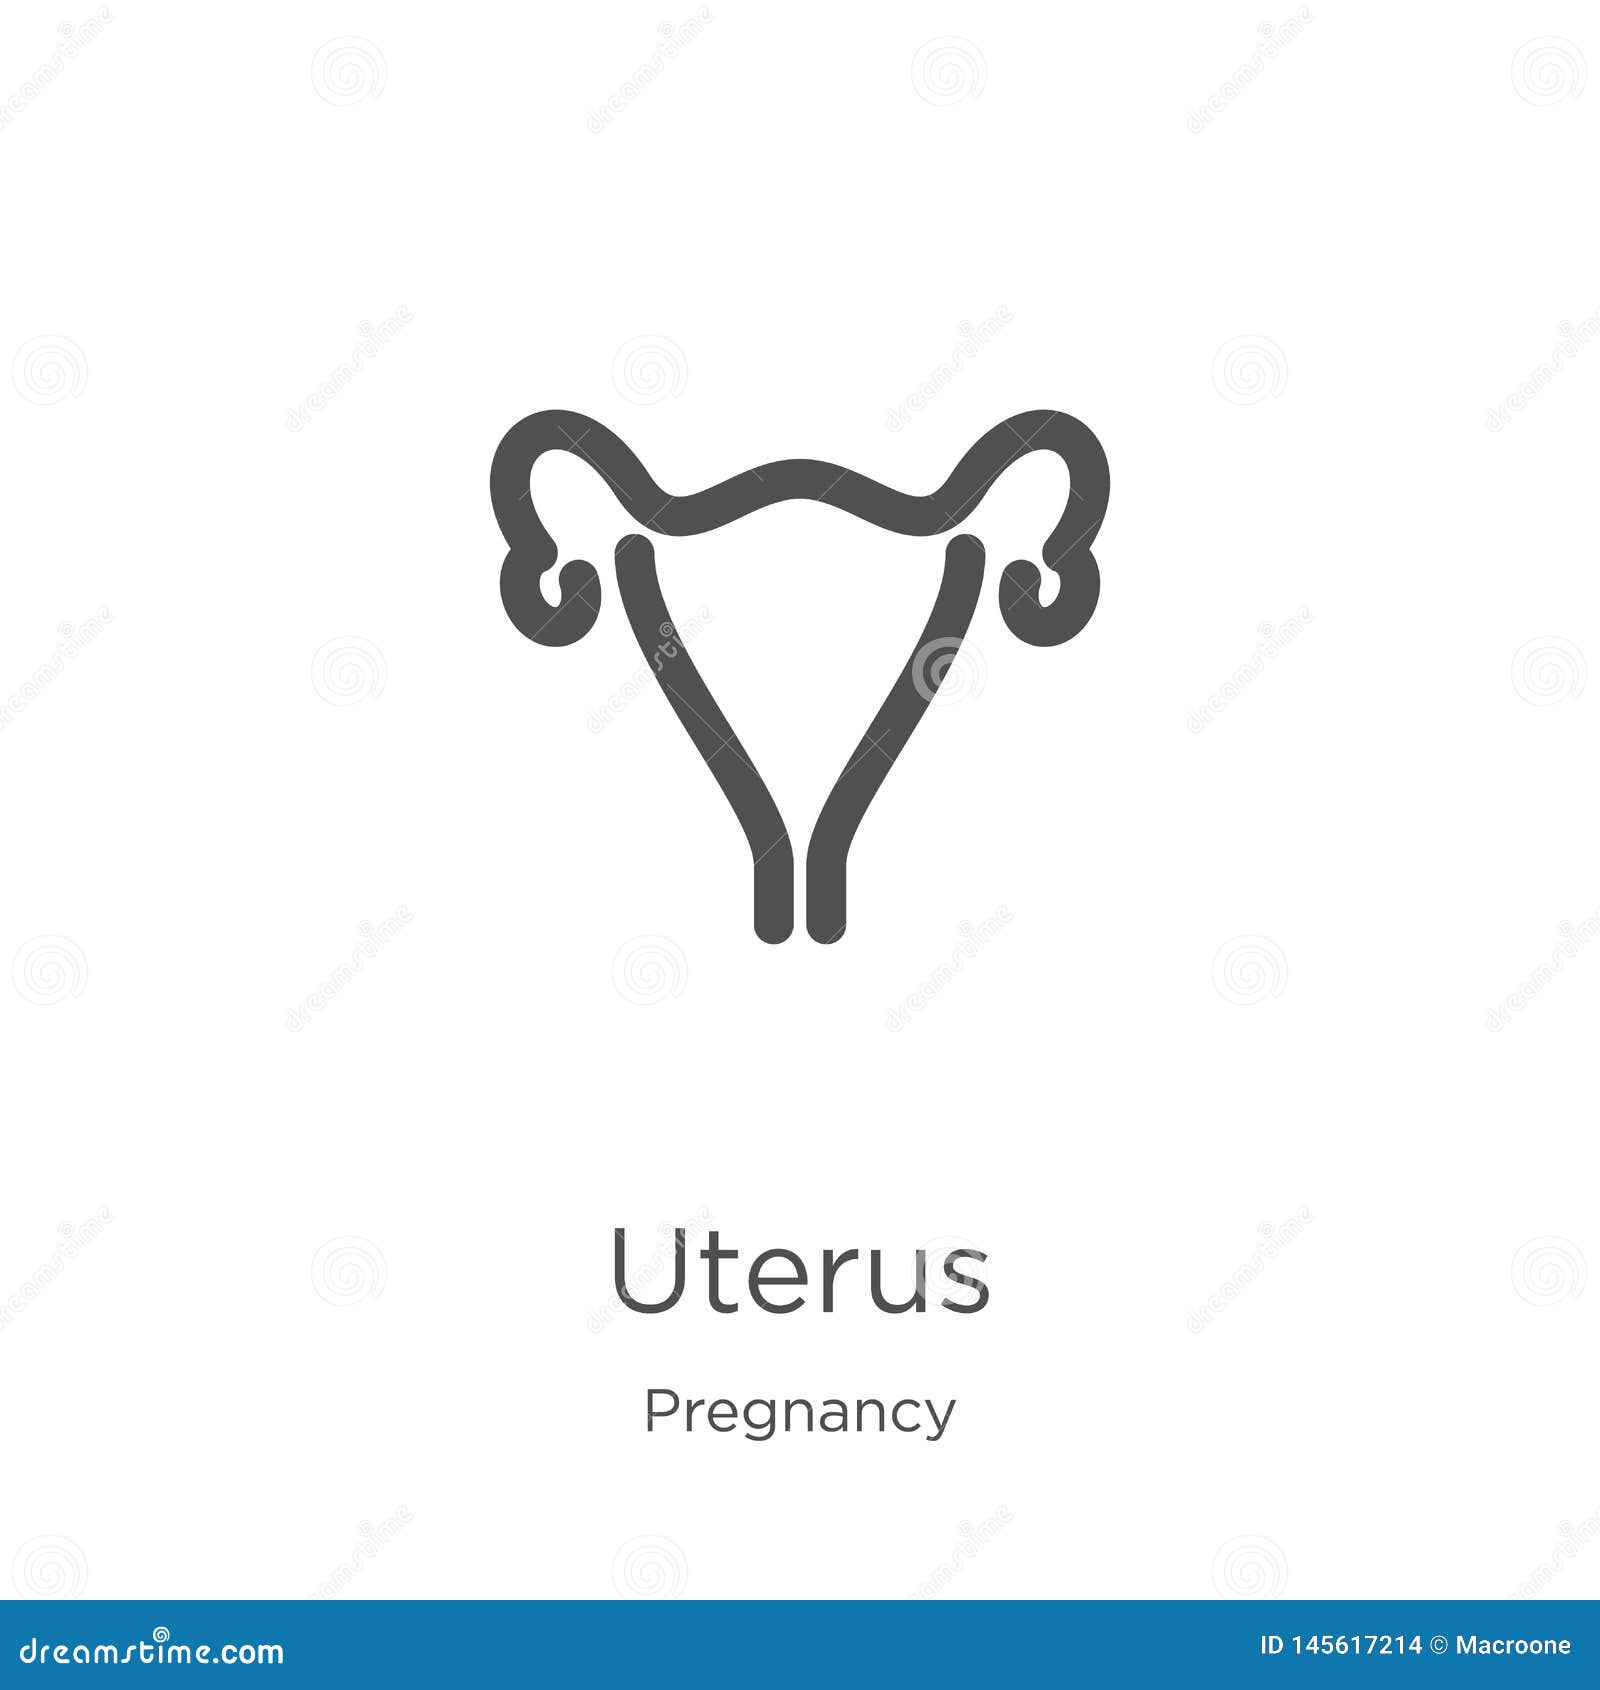 uterus icon vector from human body collection. Thin line uterus